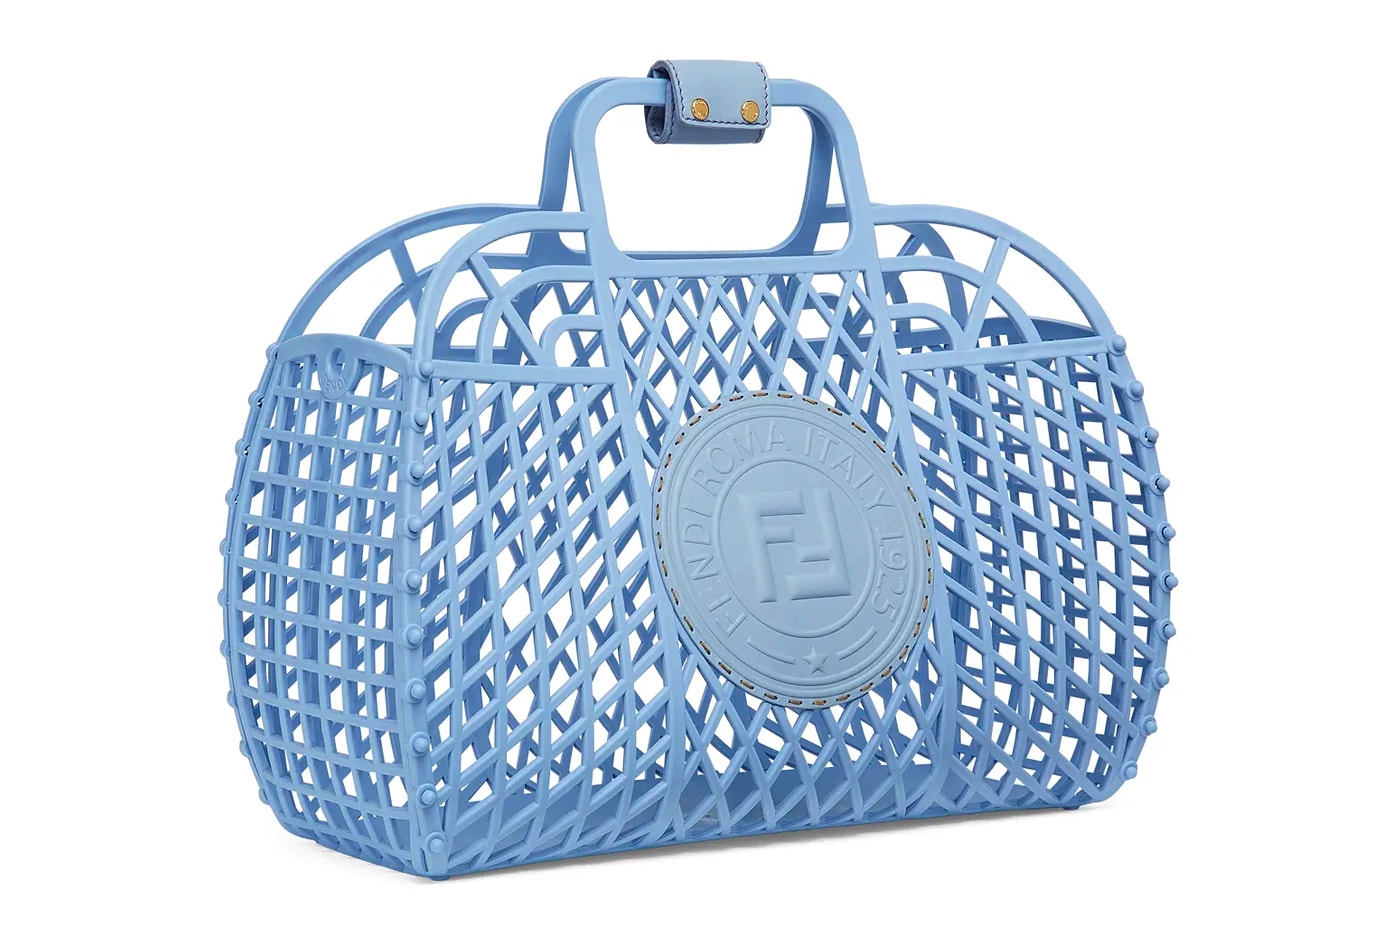 Fendi Recycled Plastic BASKET Handbag Release 1990s nostalgia shopping basket 